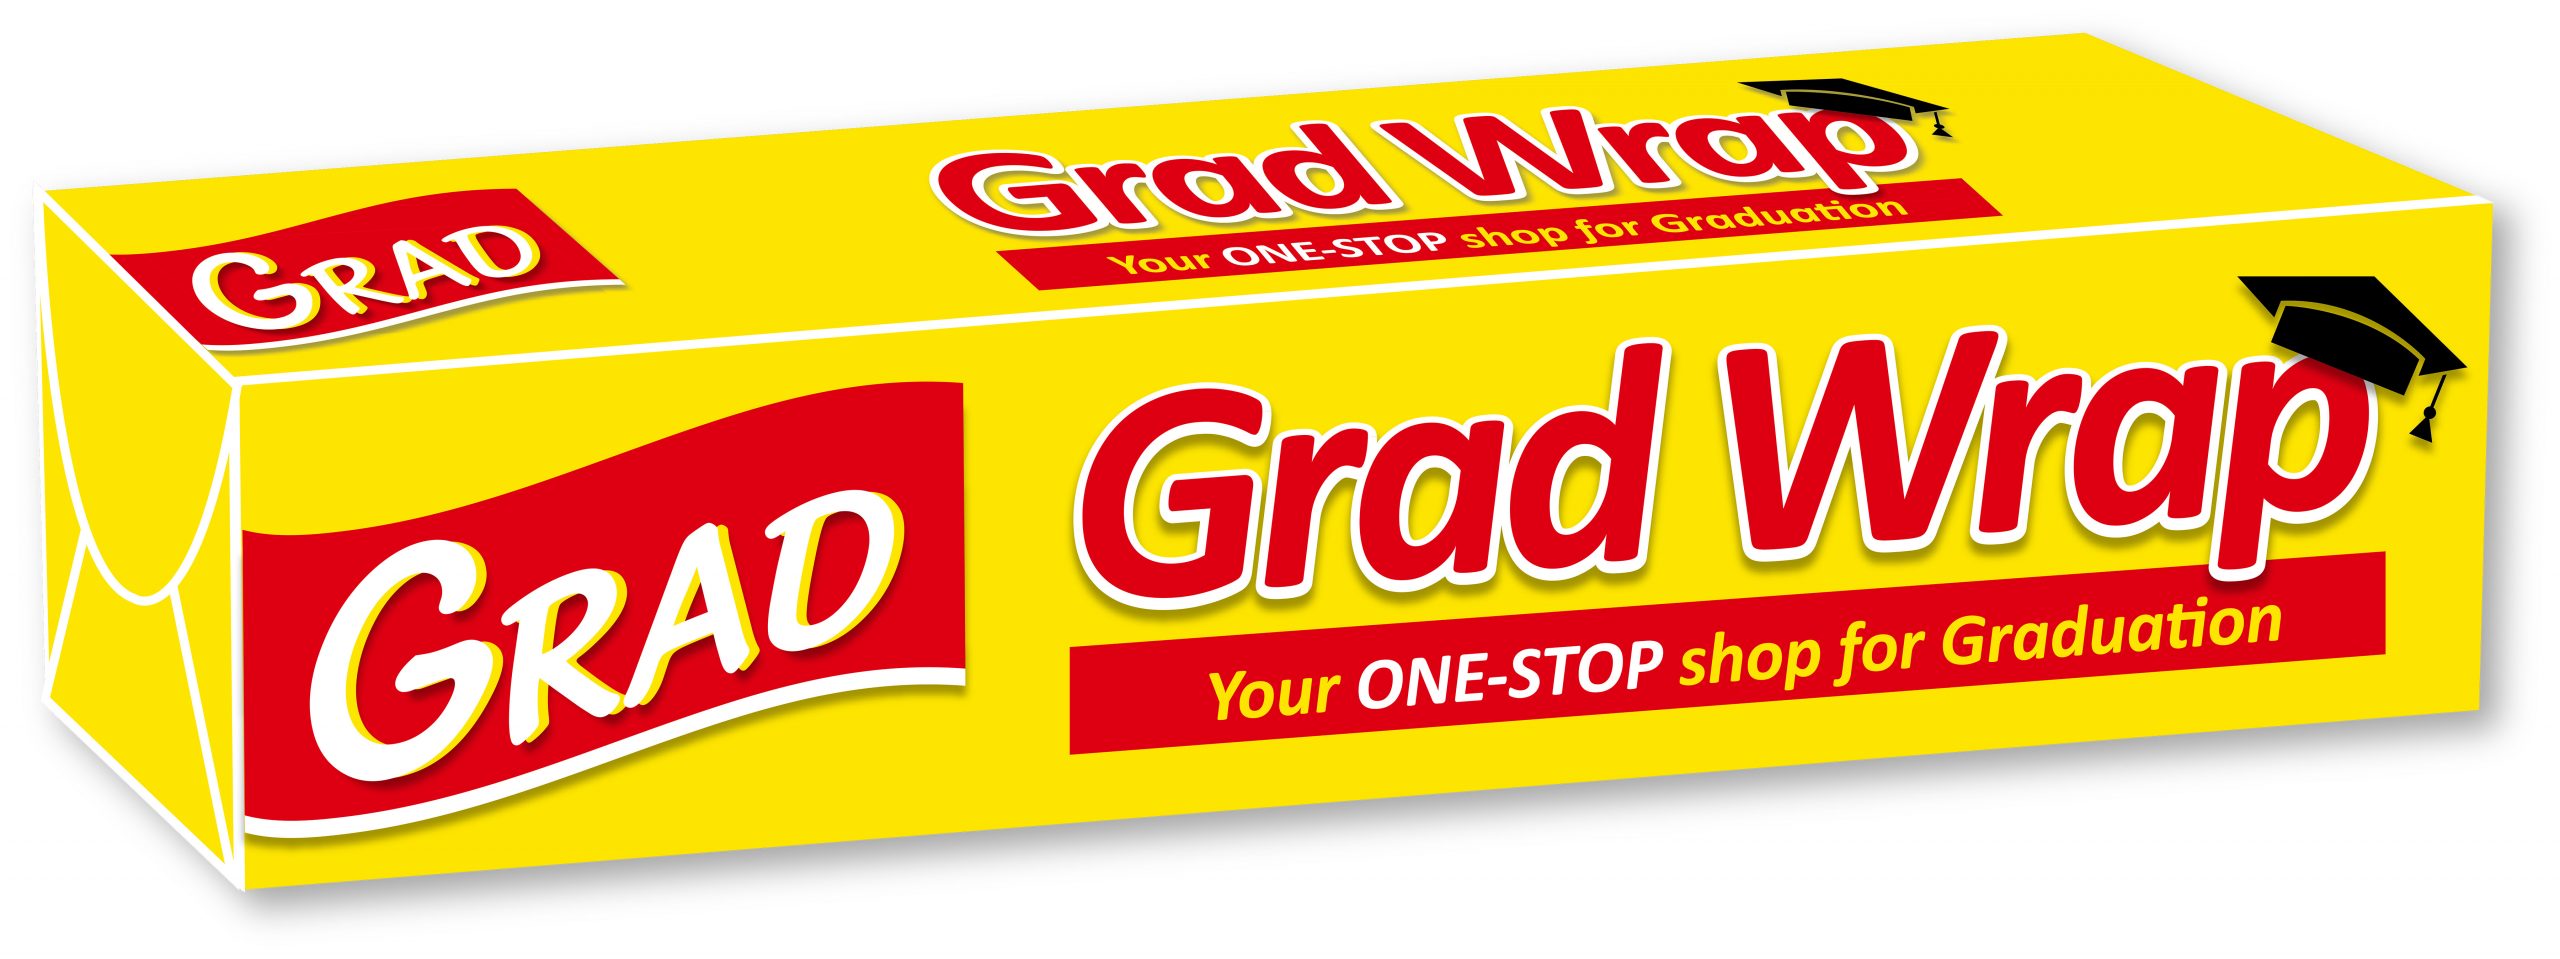 Grad Wrap